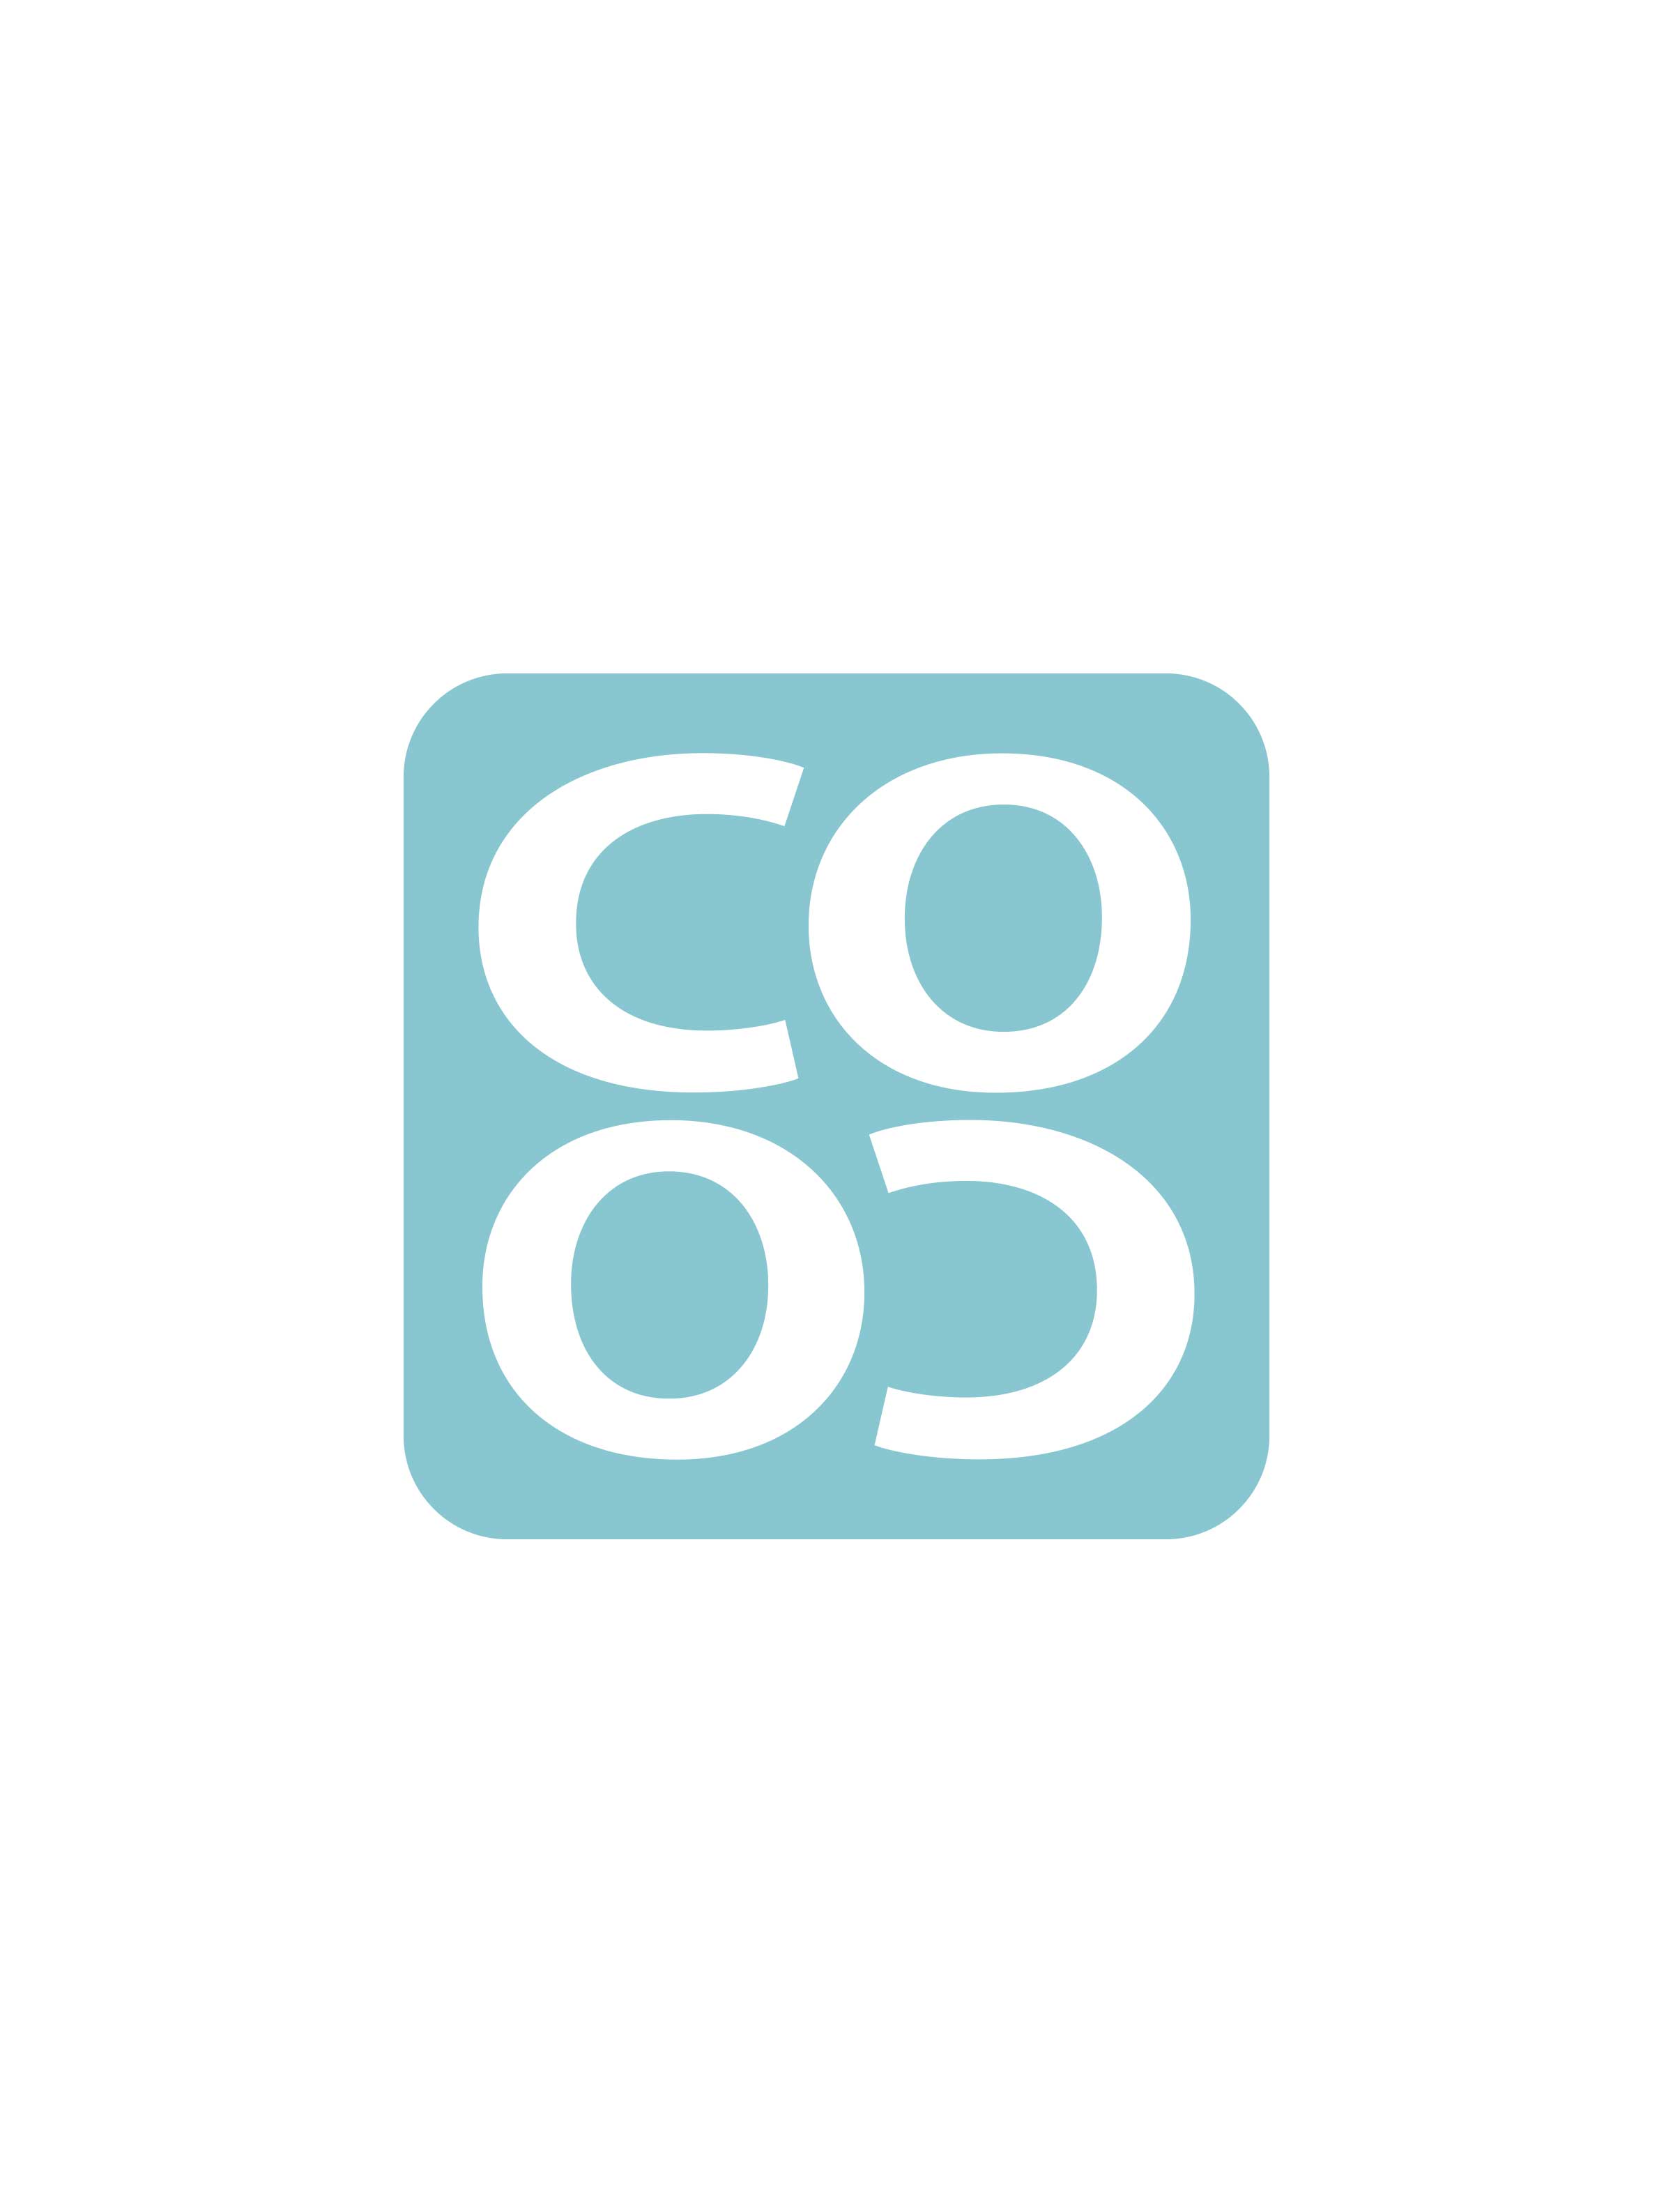 Coco Contours Reflect Swim Short - Heritage-613 BLOOM